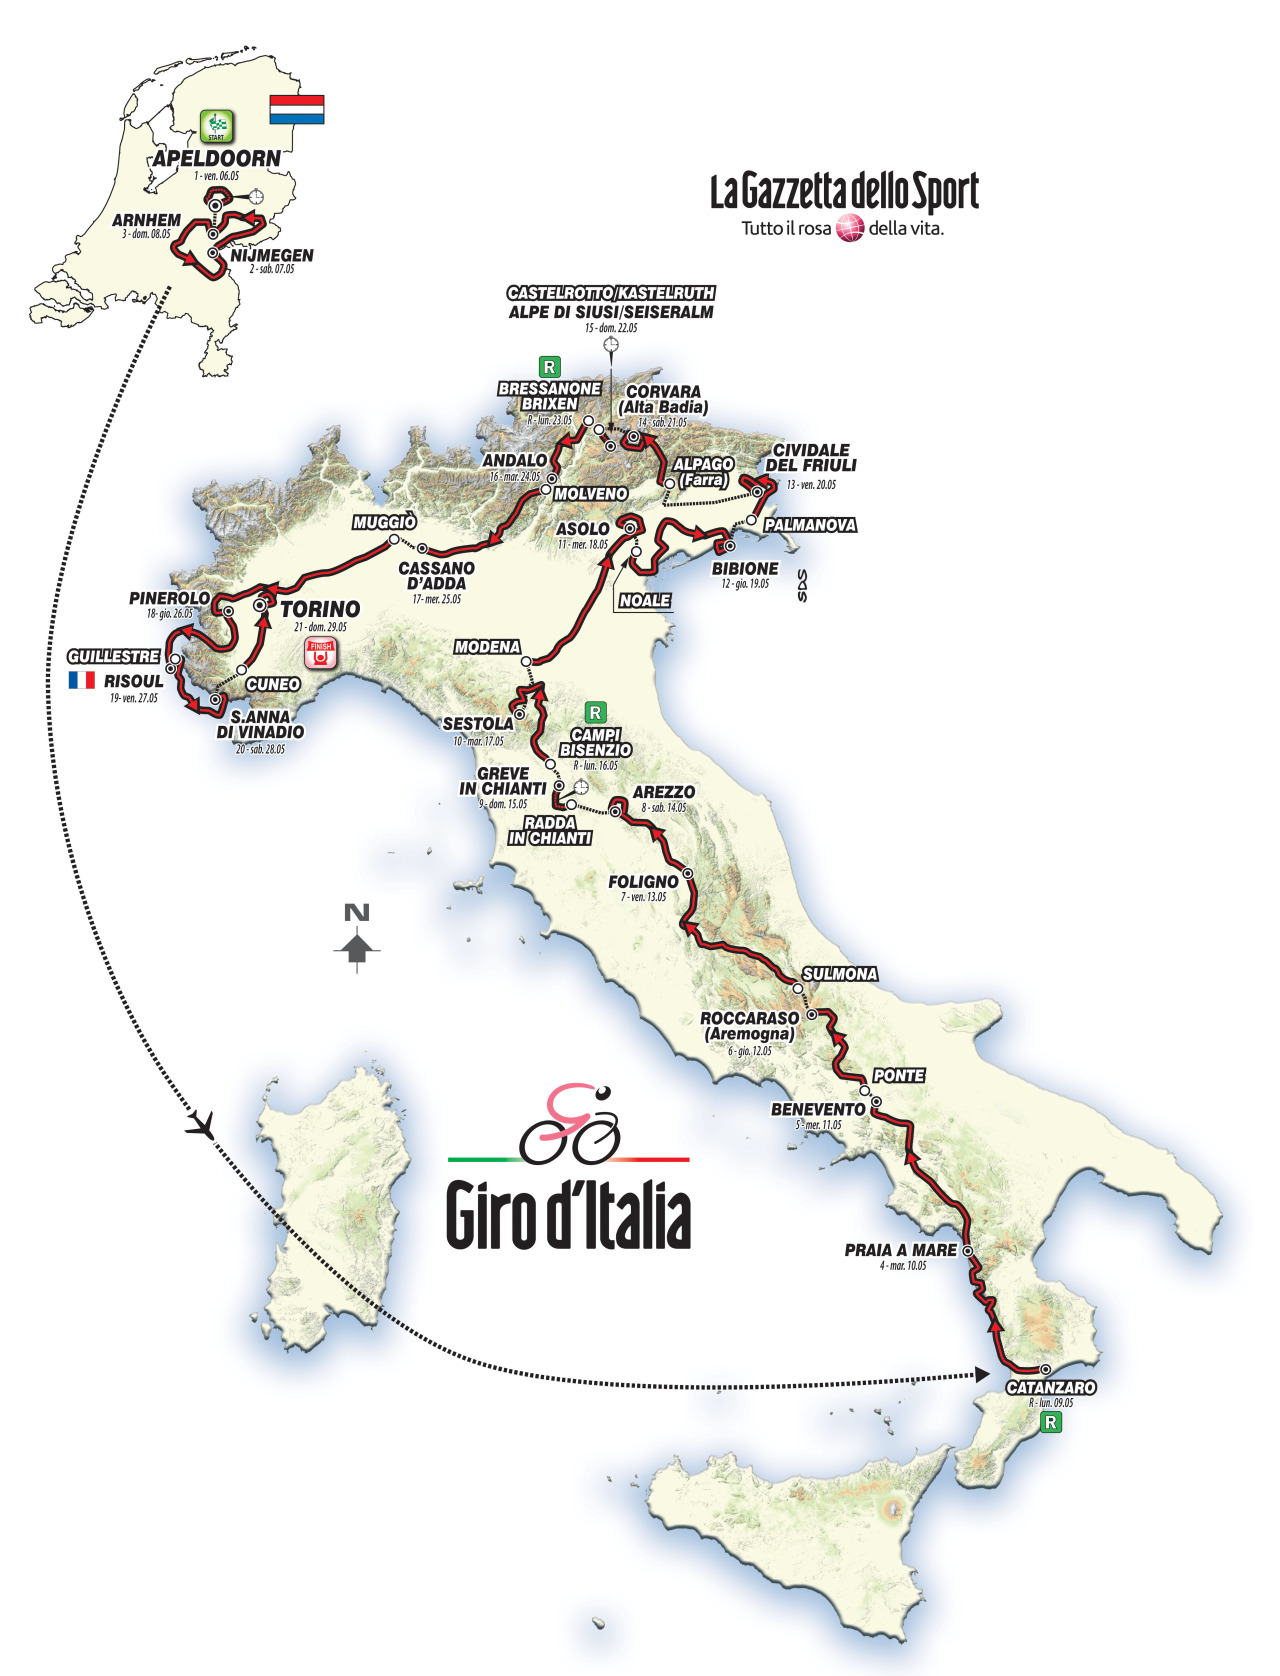 2016 Giro d'Italia Route Map